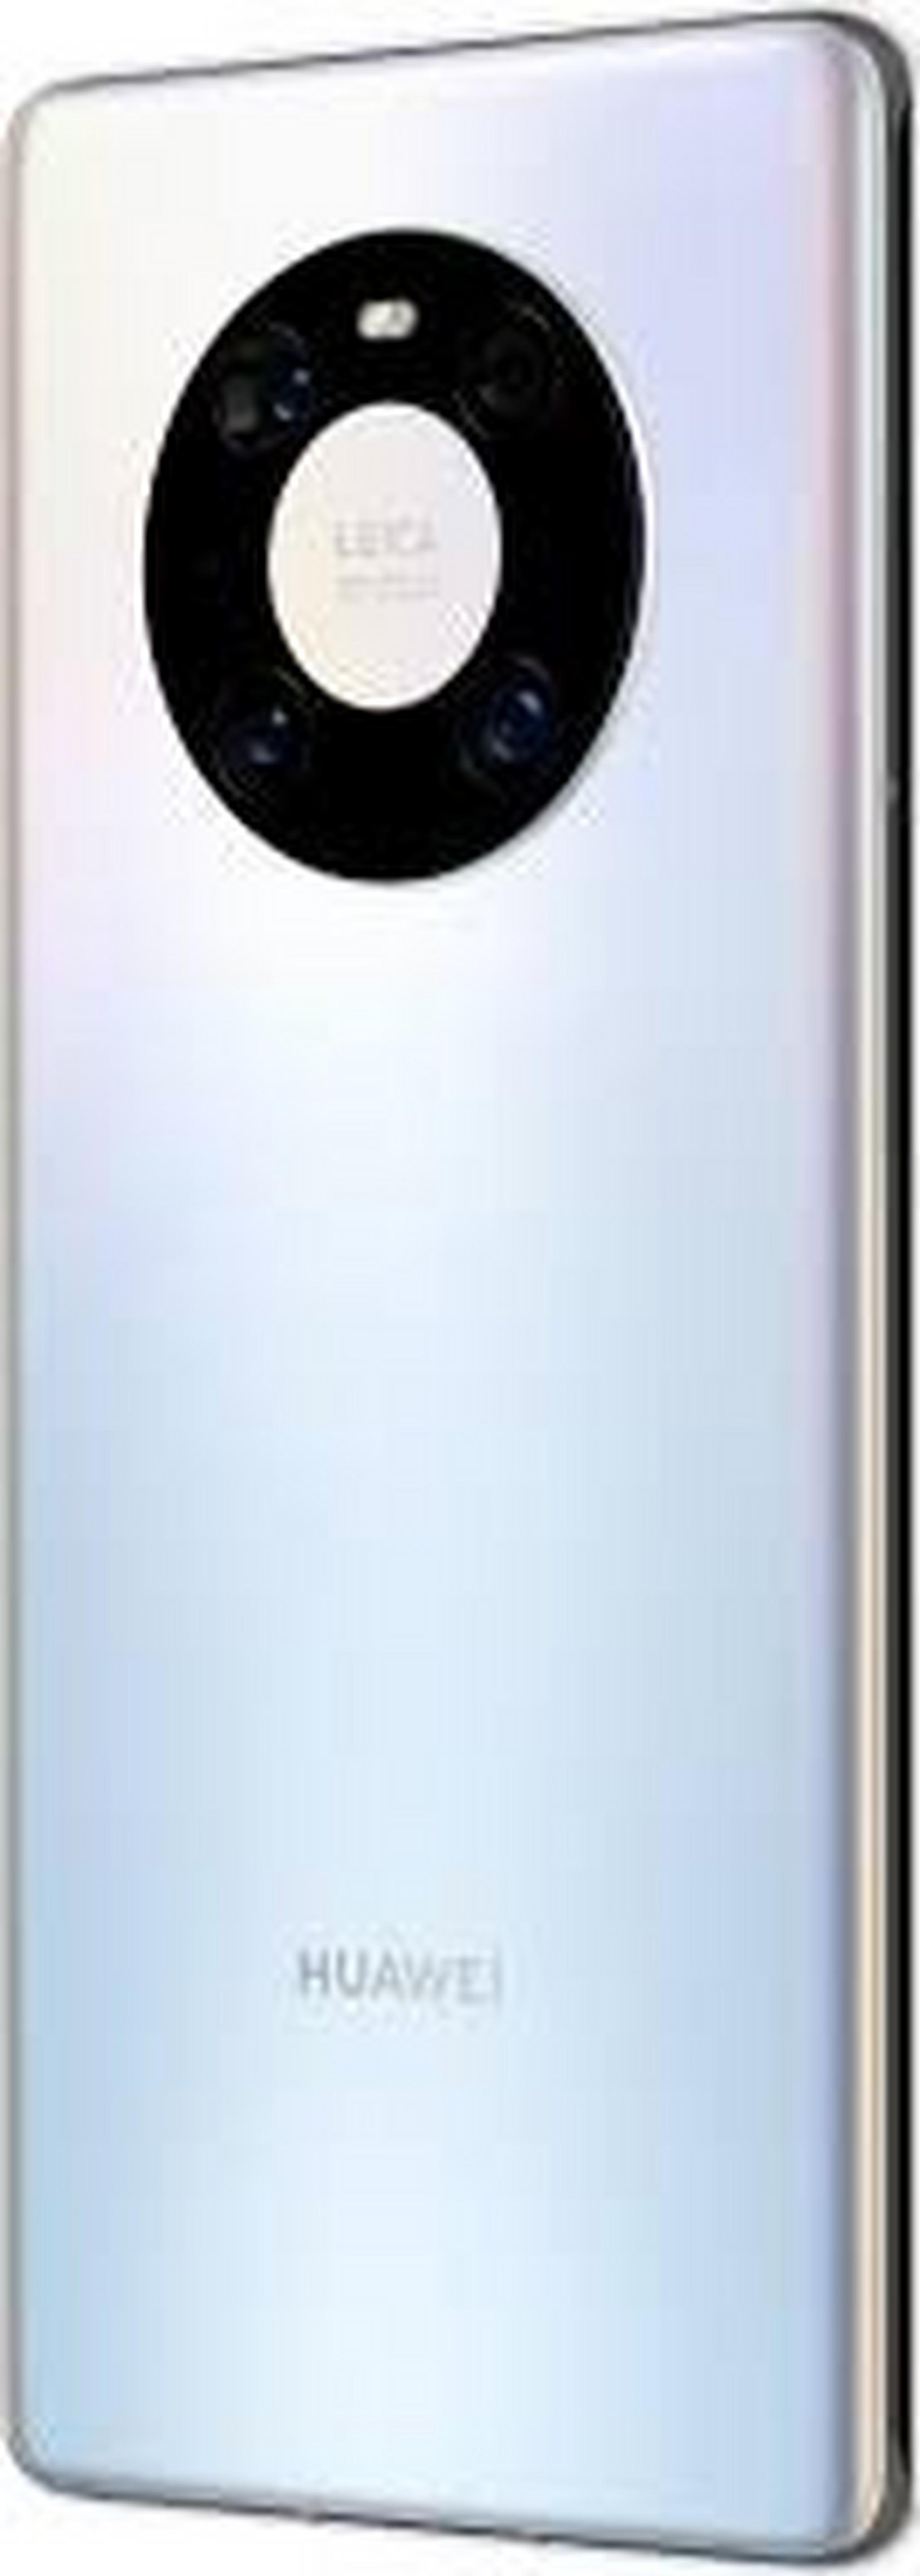 Huawei Mate 40 Pro 256GB Phone - Silver